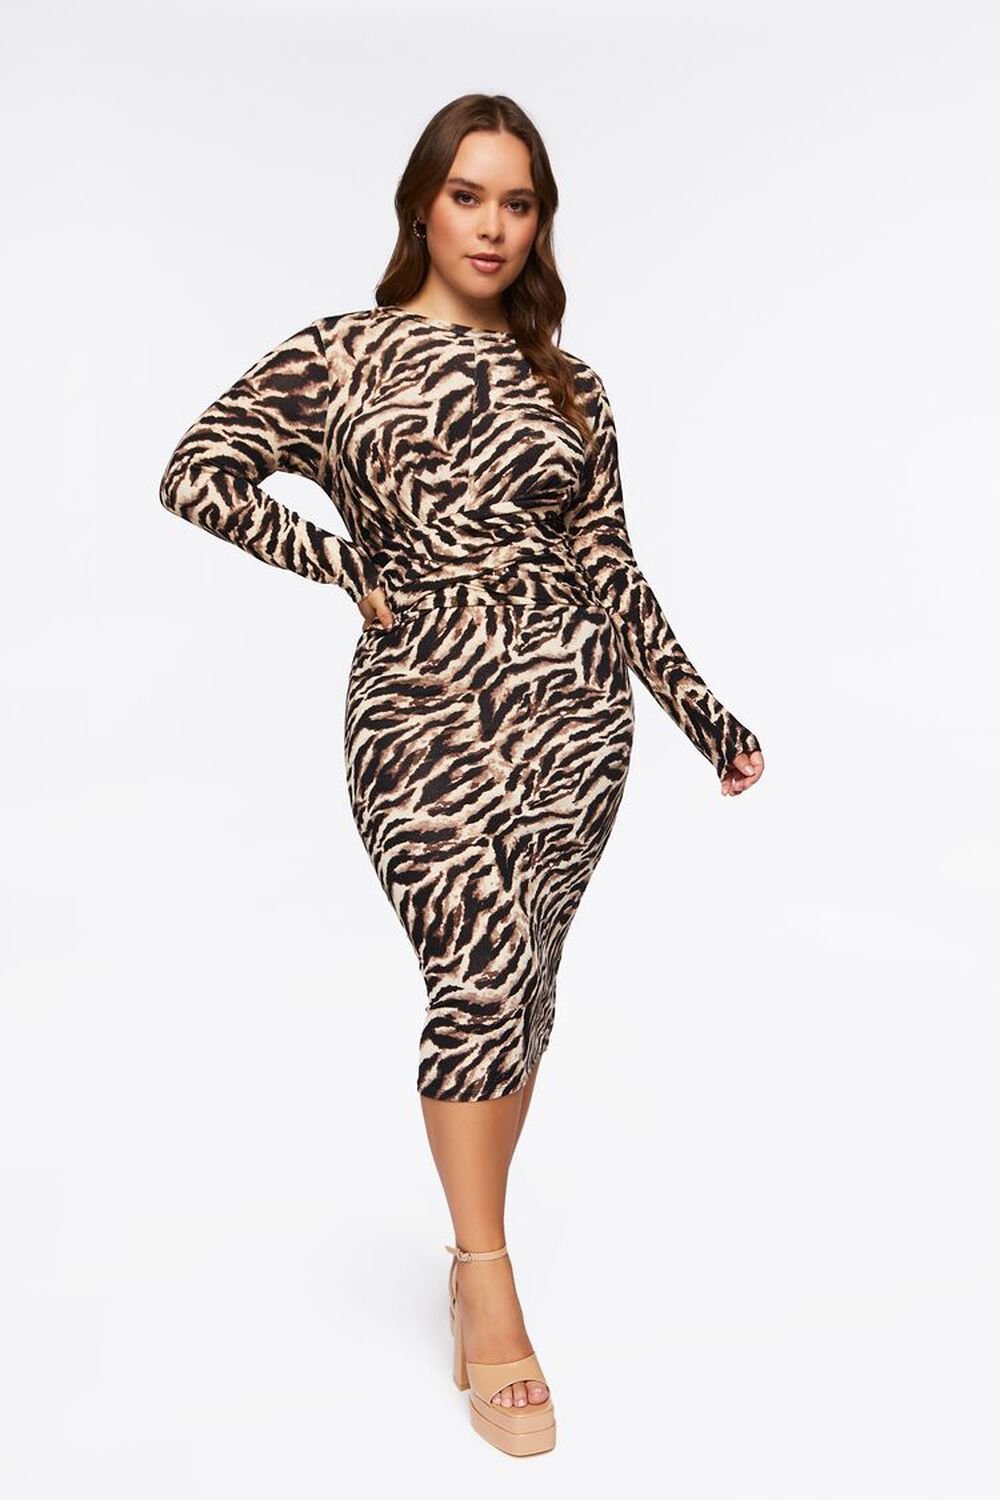 BROWN/MULTI Plus Size Zebra Print Midi Dress, image 1